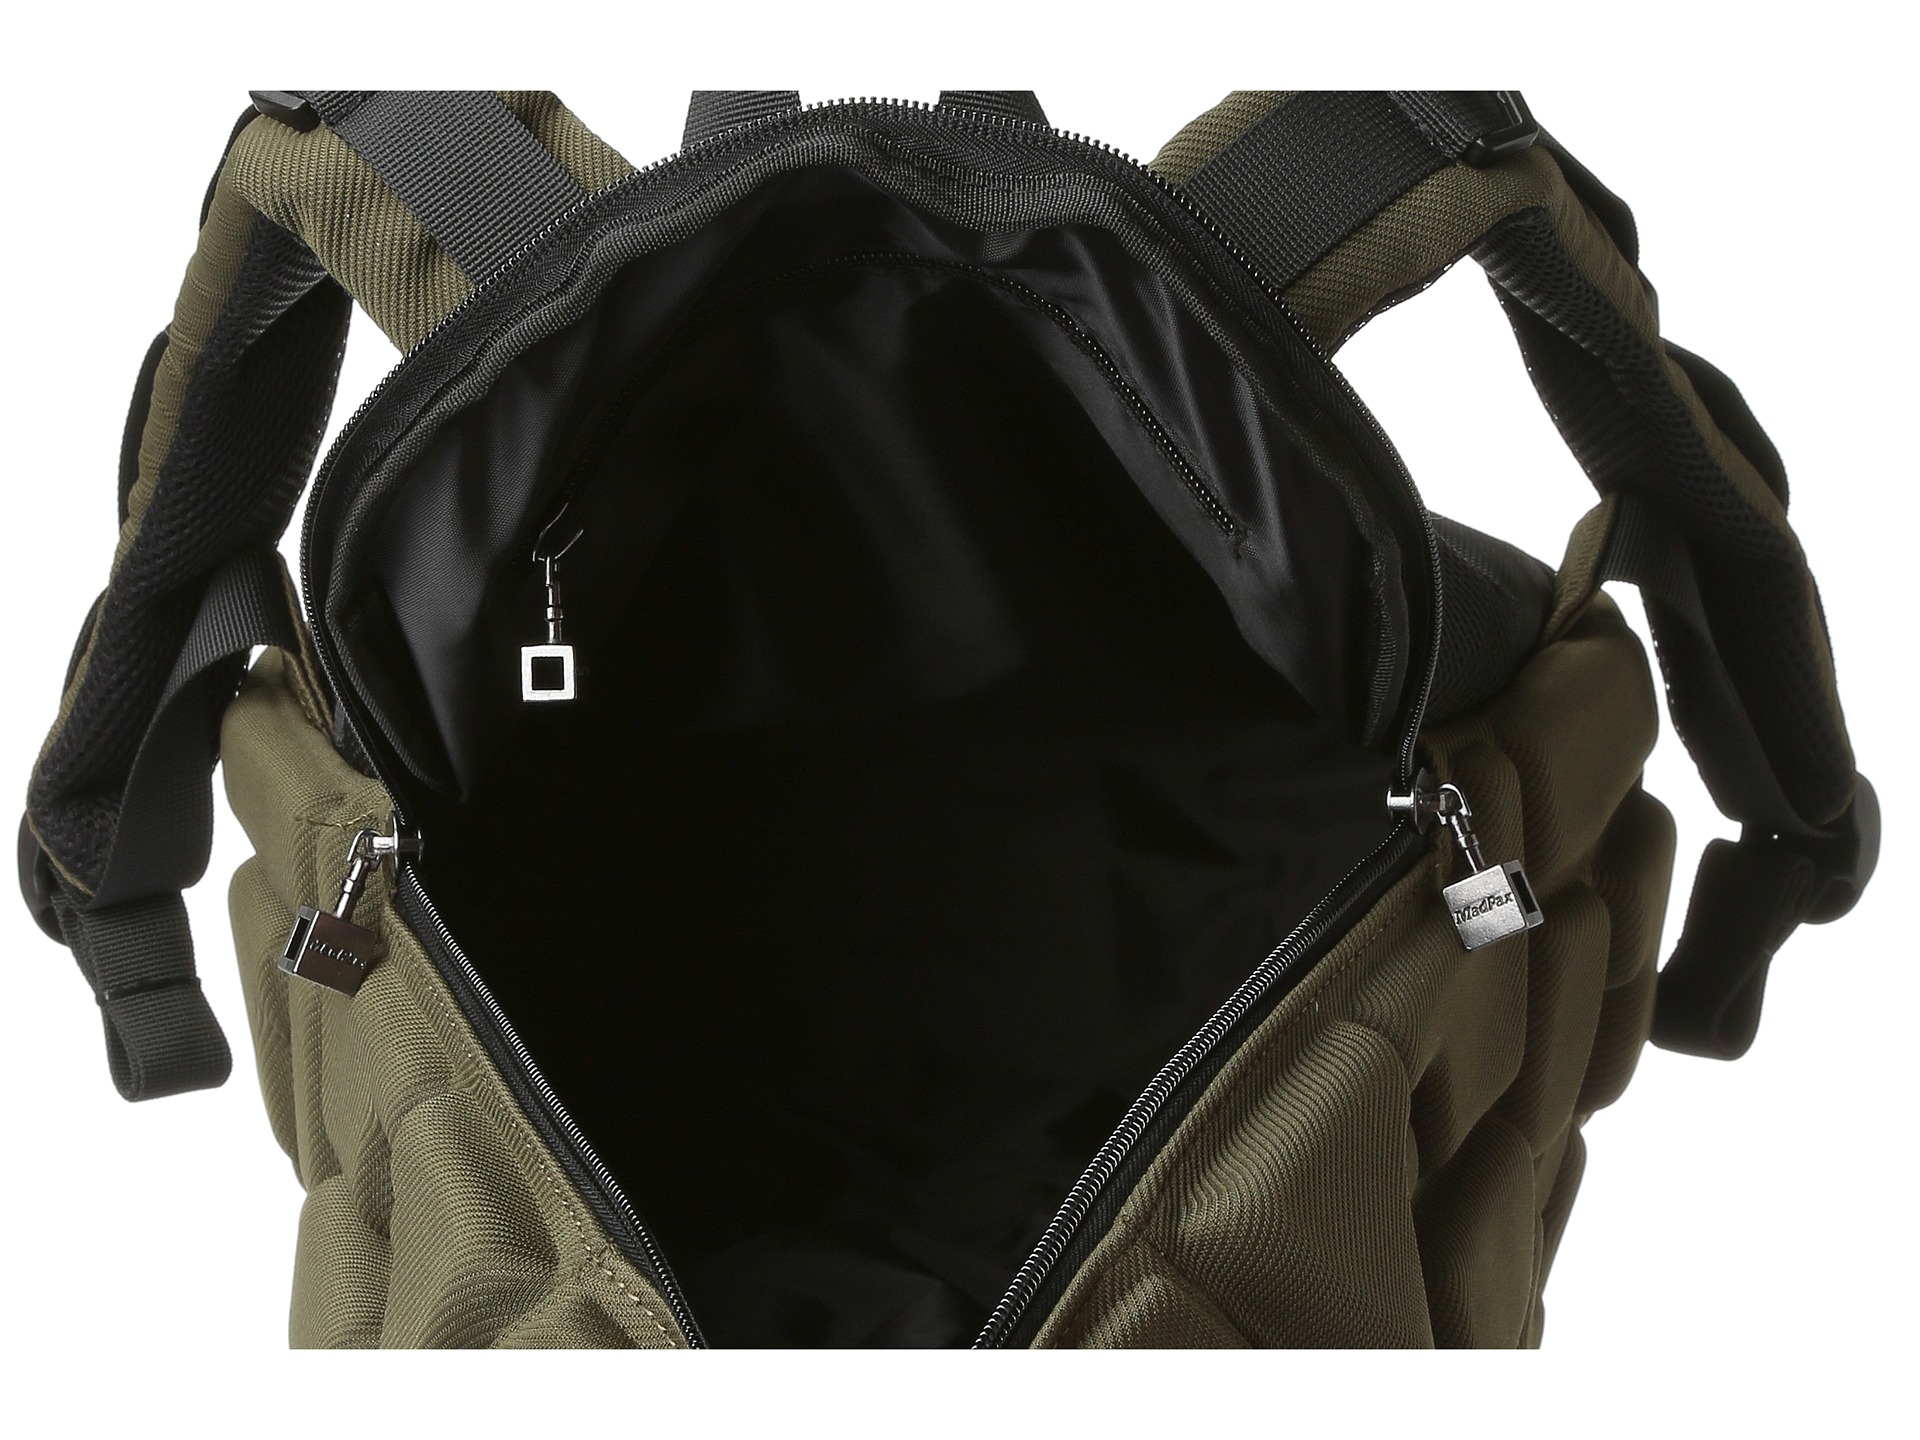 Madpax Blok Half Pack, Bags | Shipped Free at Zappos